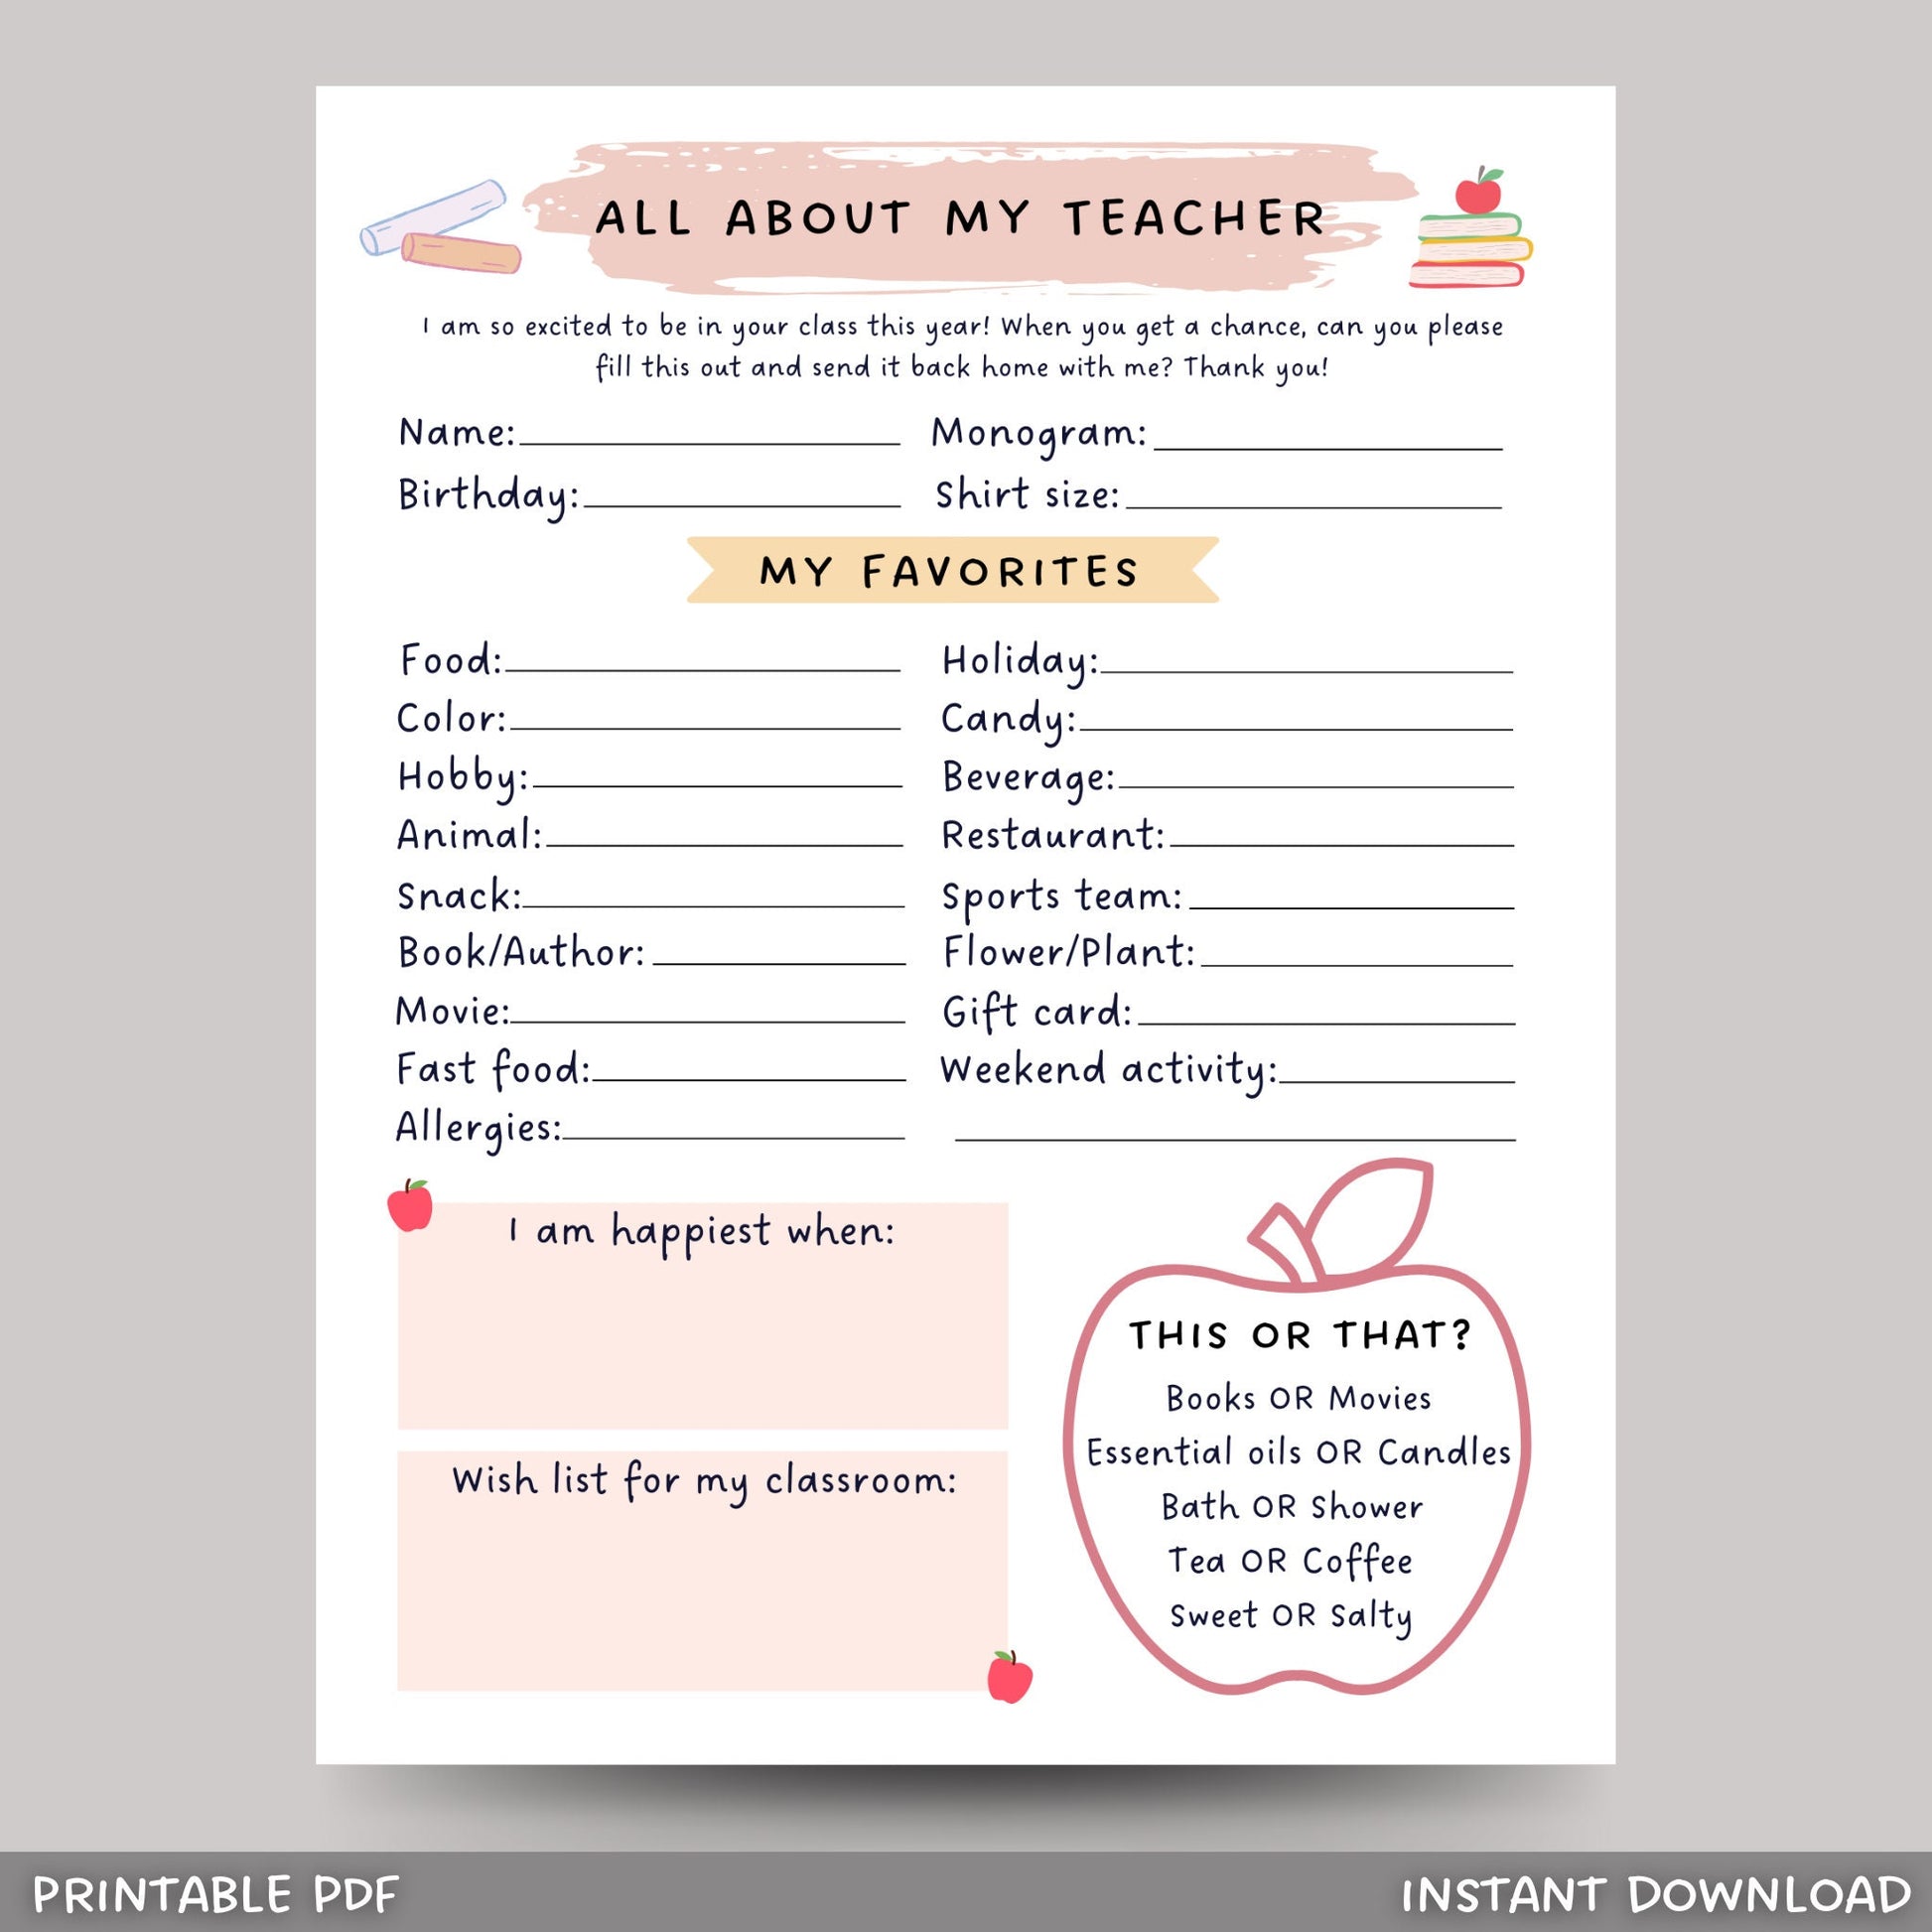 All About My Teacher Survey, Back to School Teacher Questionnaire Printable, Teacher Favorites, Teacher Appreciation, Get to Know Teacher